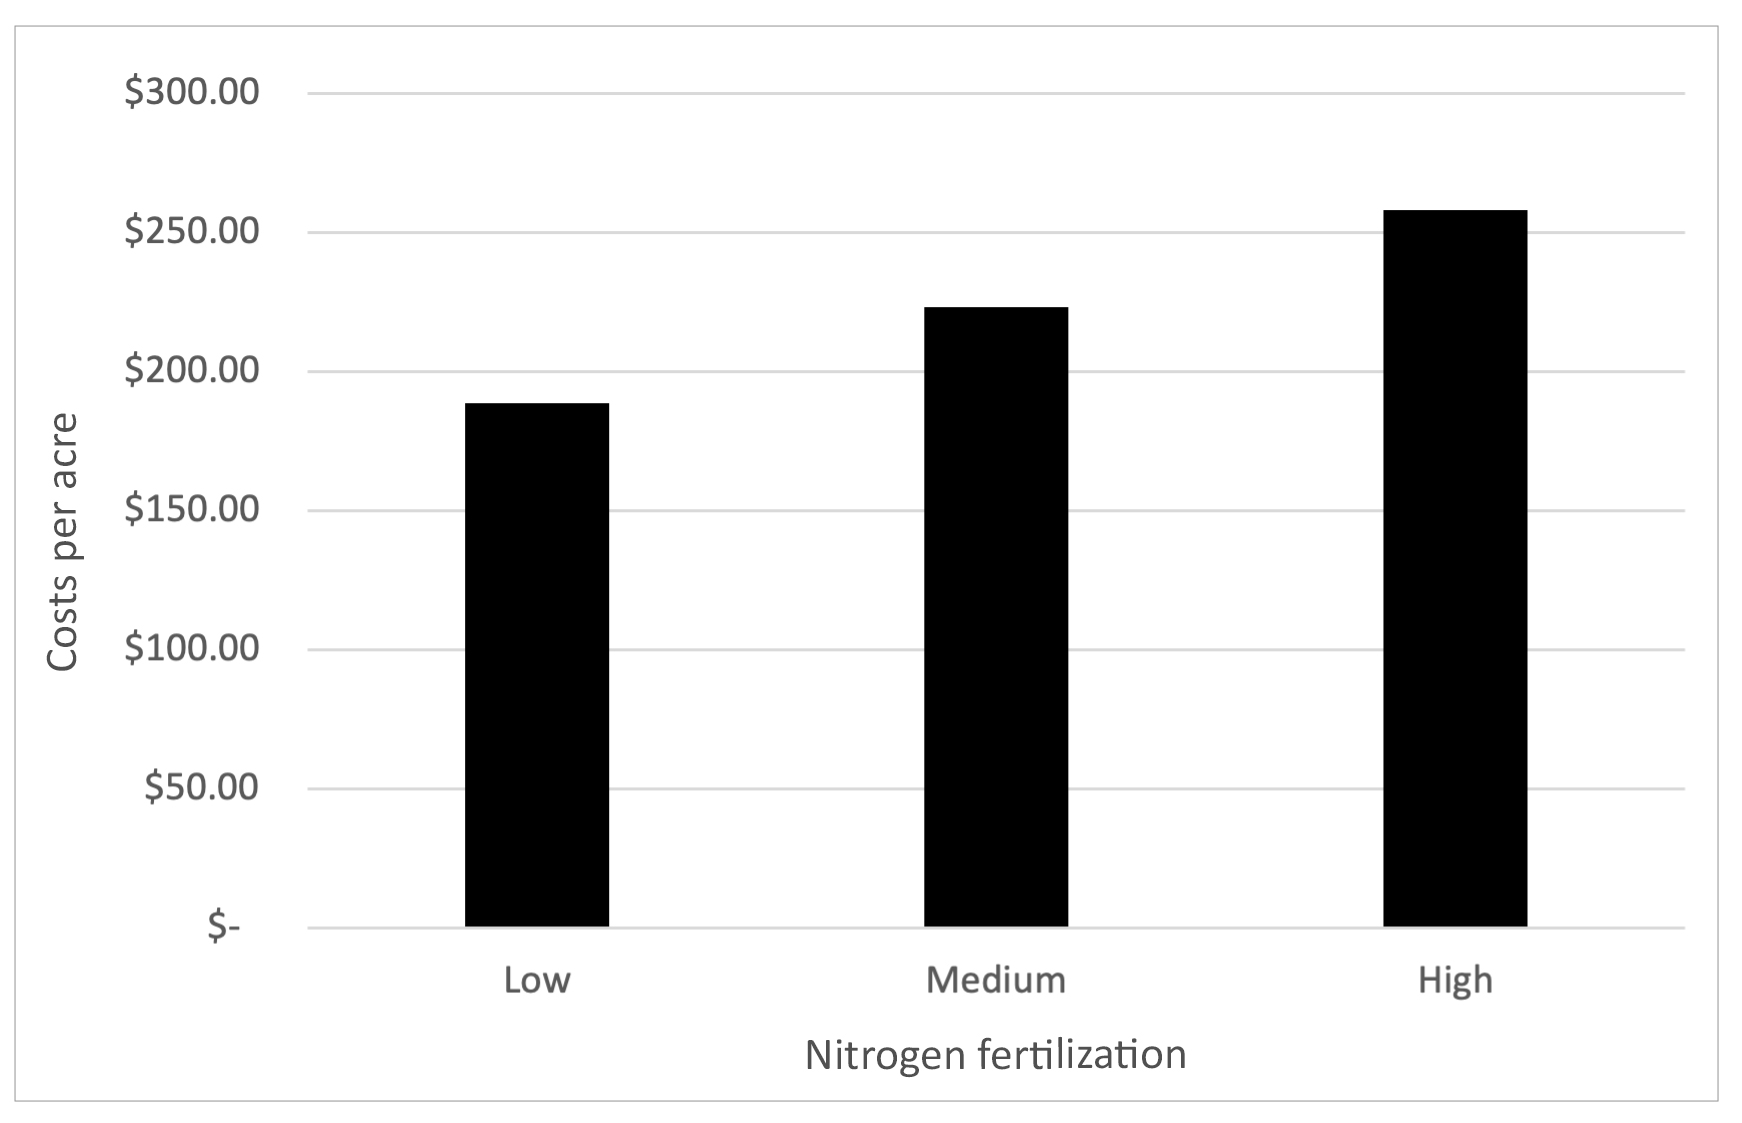 Estimated costs per acre for bahiagrass at low, medium, and high nitrogen fertilization.